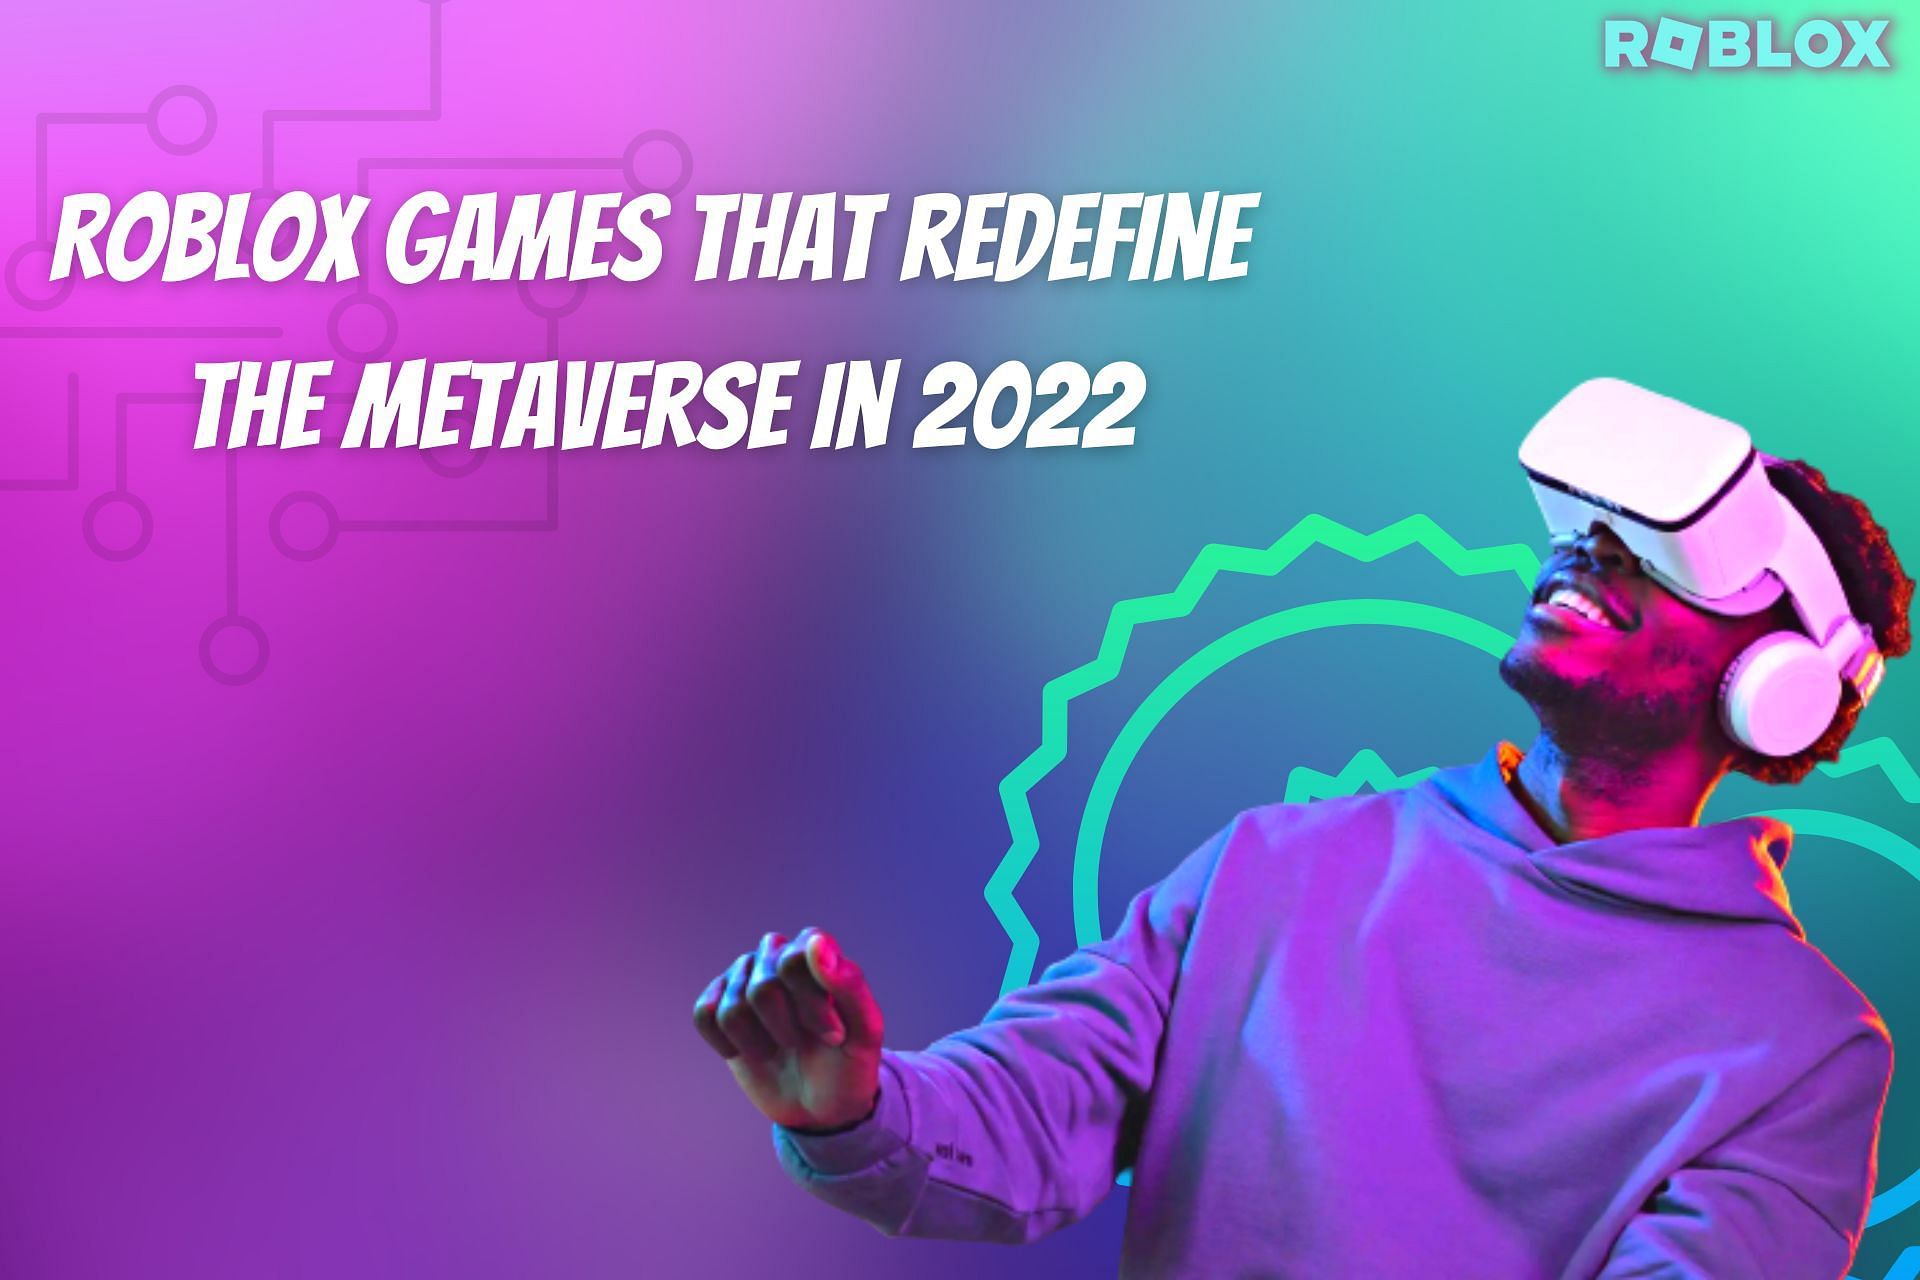 Roblox VR games that redefine the metaverse (Image via Sportskeeda)